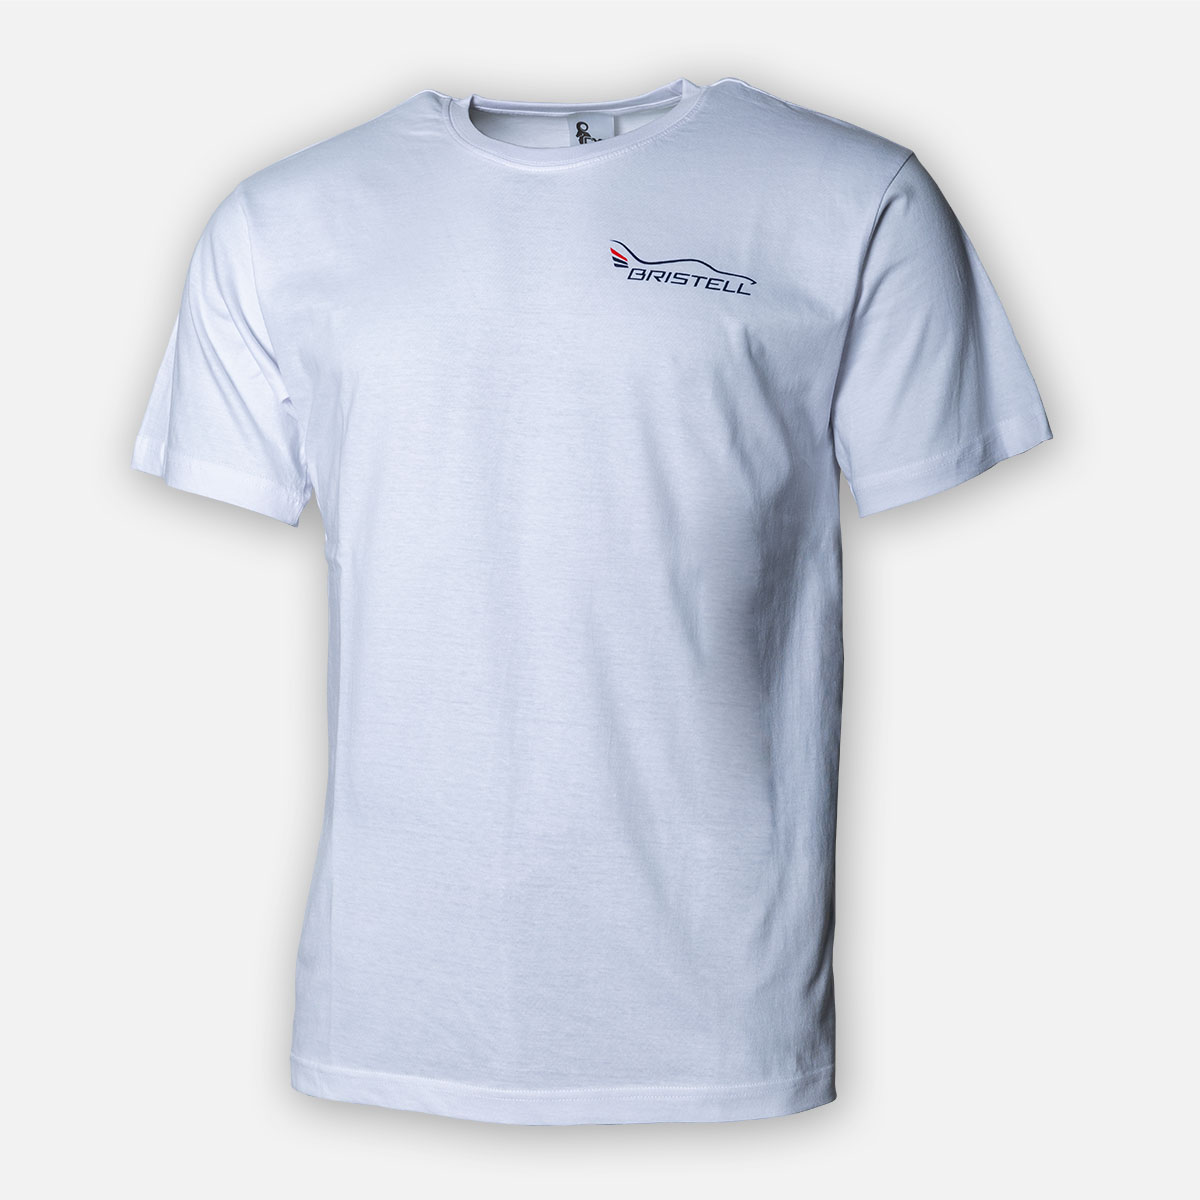 BRISTELL T-shirt with logo white